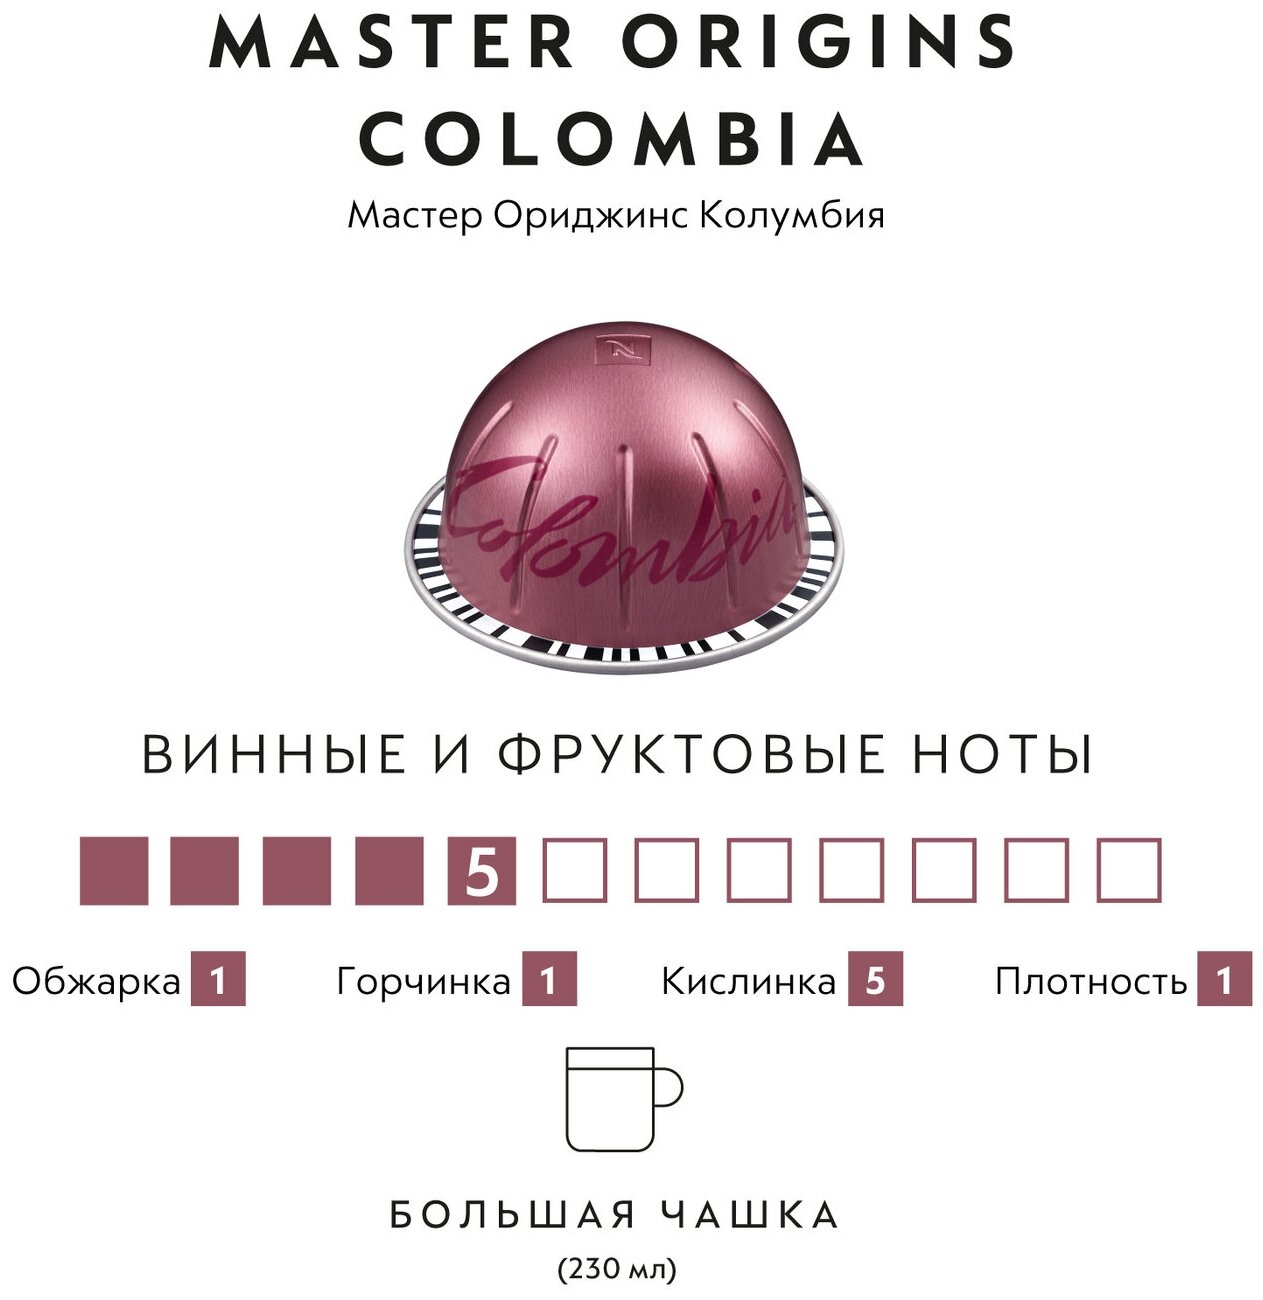 Оригинальные капсулы Nespresso система Vertuo Master Origins Colombia - фотография № 12